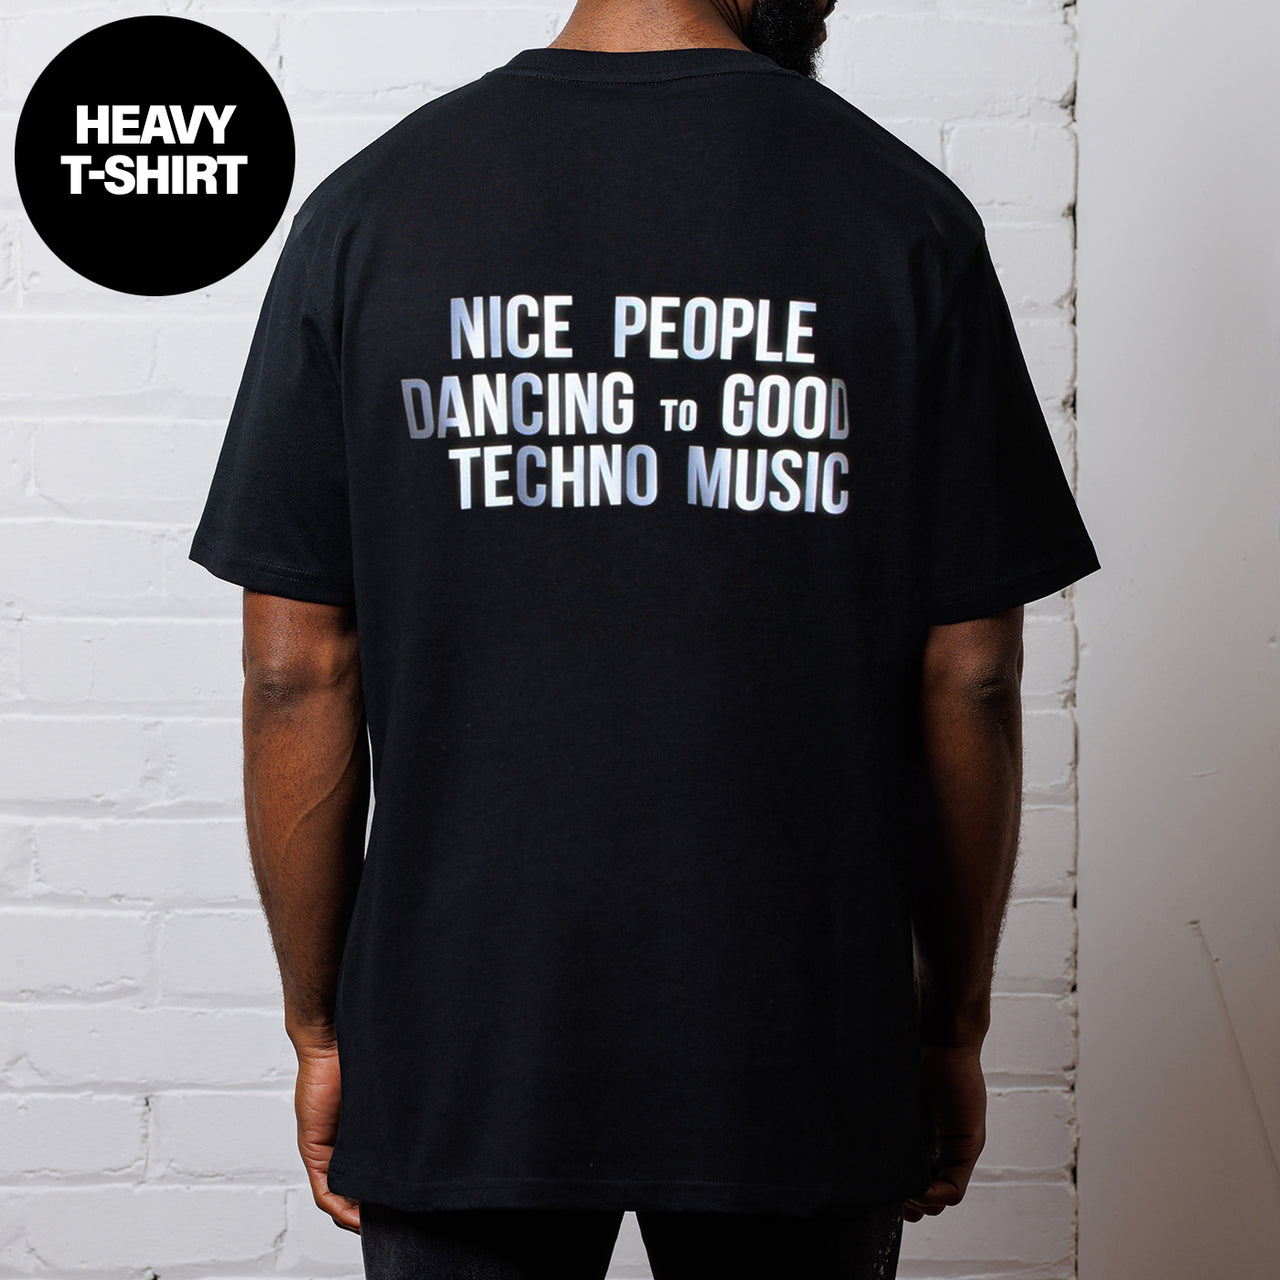 Reflective Peoples Techno - Heavy Tshirt - Black